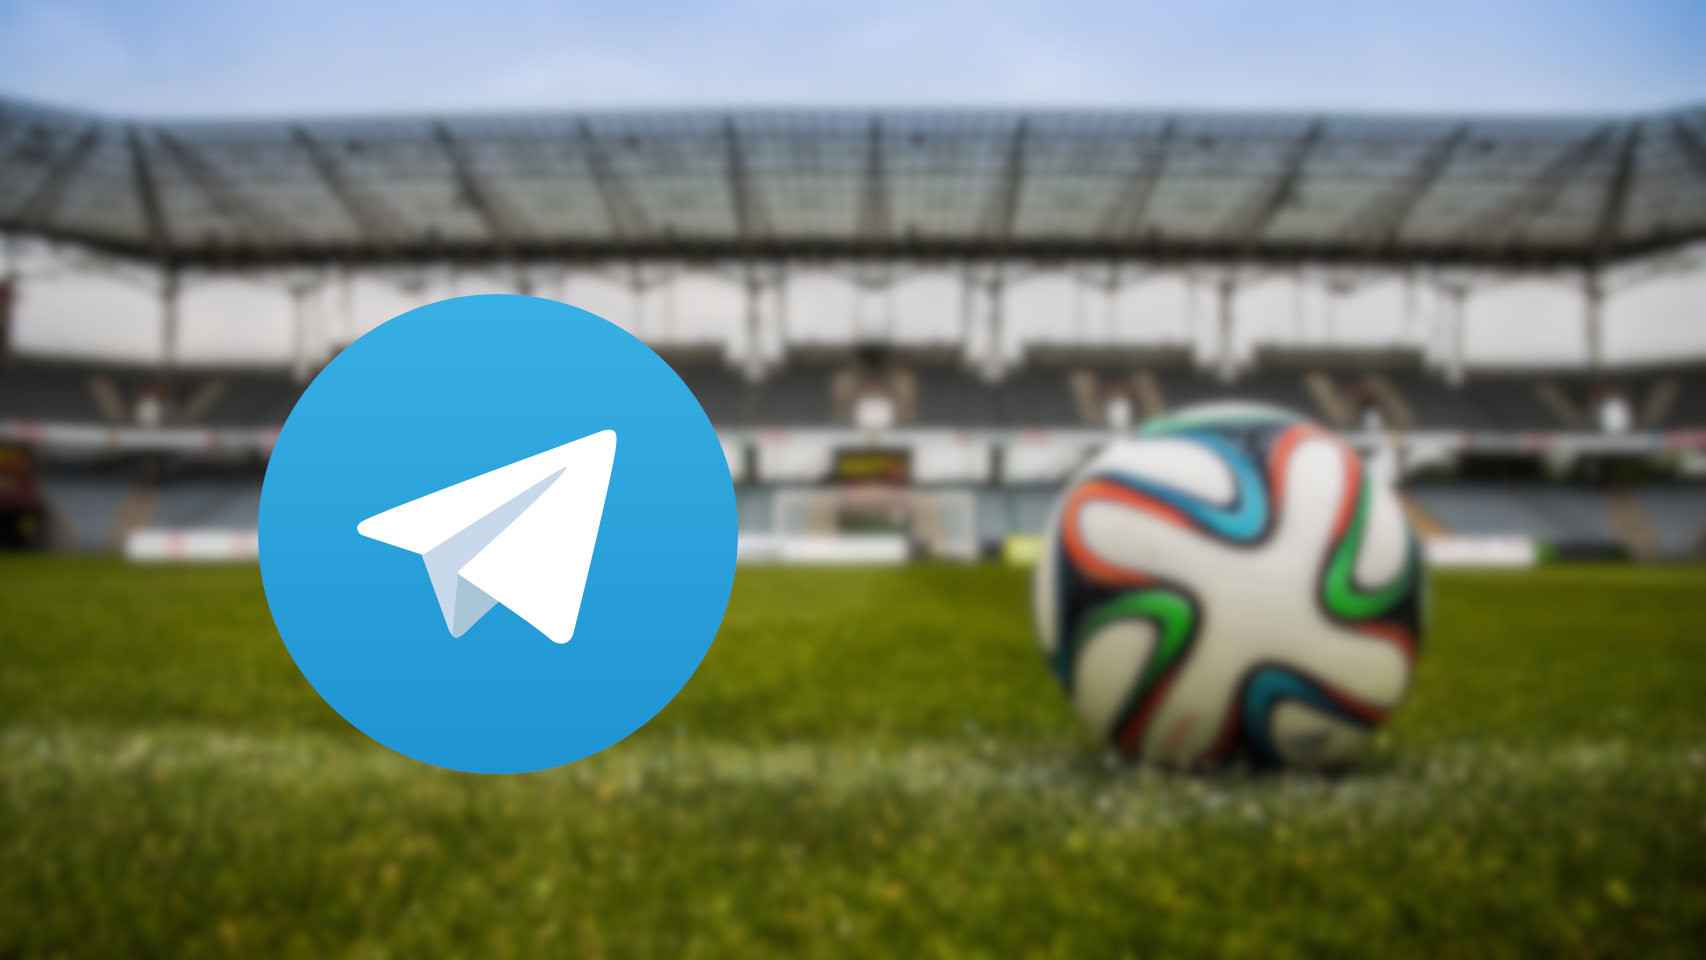 Icono de Telegram sobre un partido de fútbol